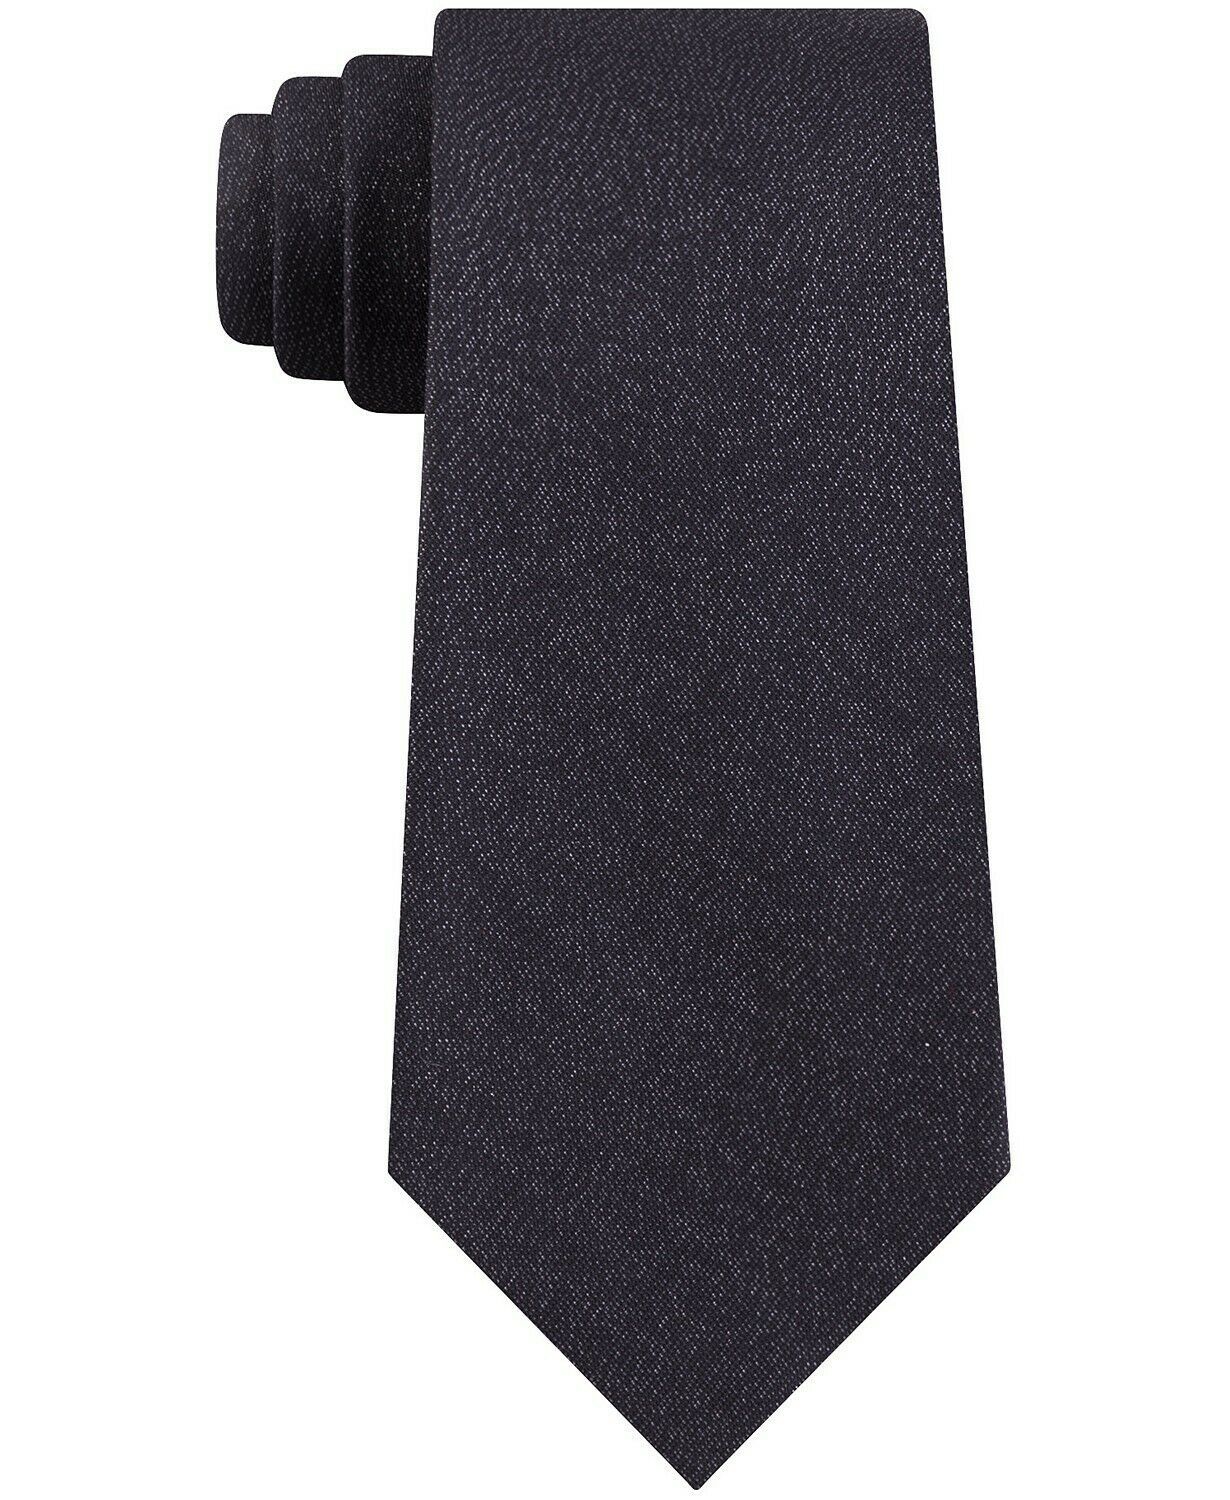 <br>Color: Blacks<br>Pattern: Solid<br>Style: Neck Tie<br>Width: Skinny (Material: Silk